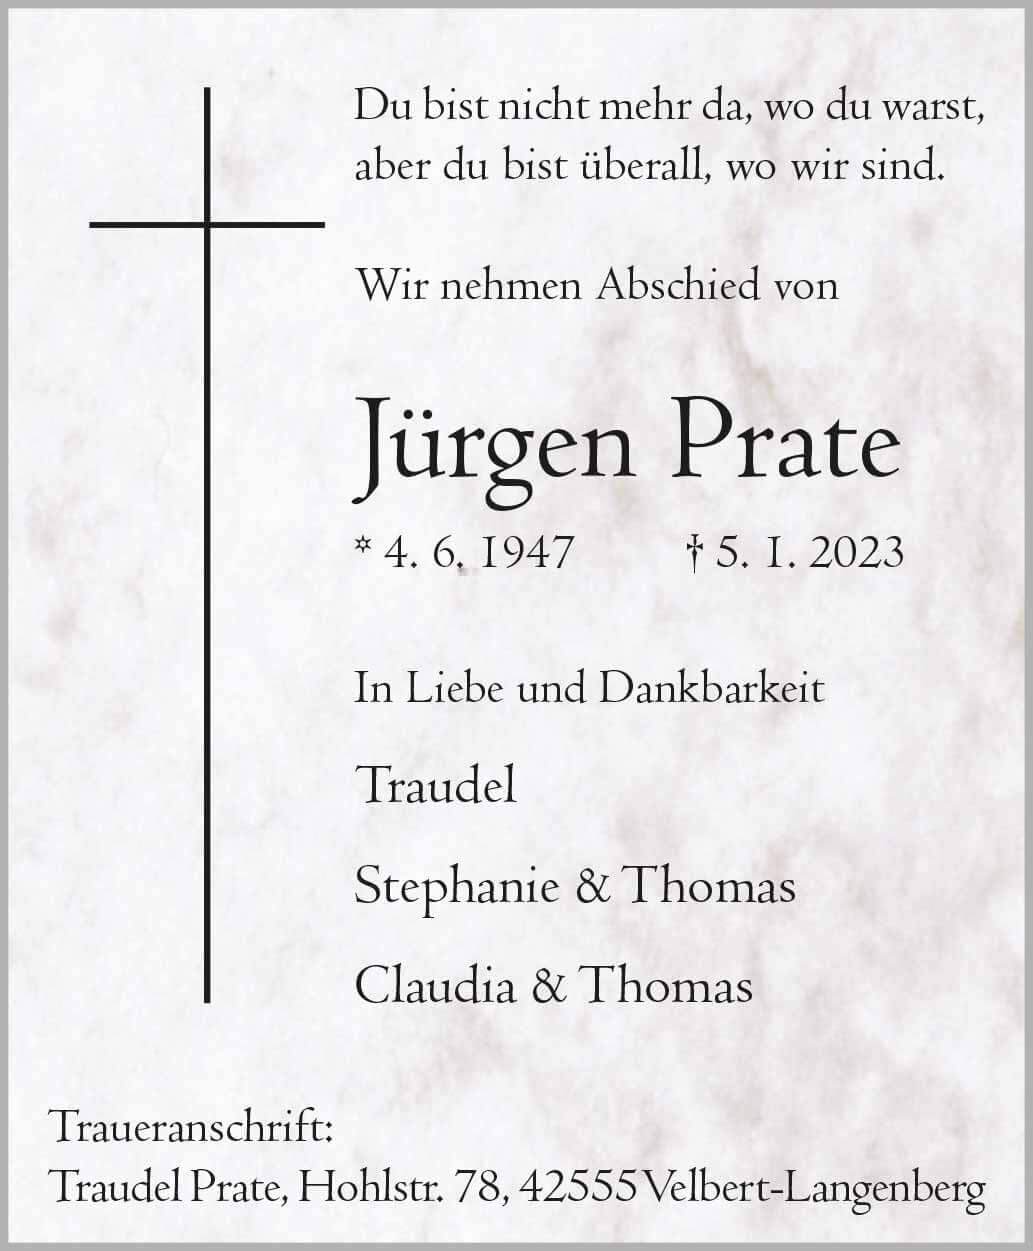 Jürgen Prate † 5. 1. 2023